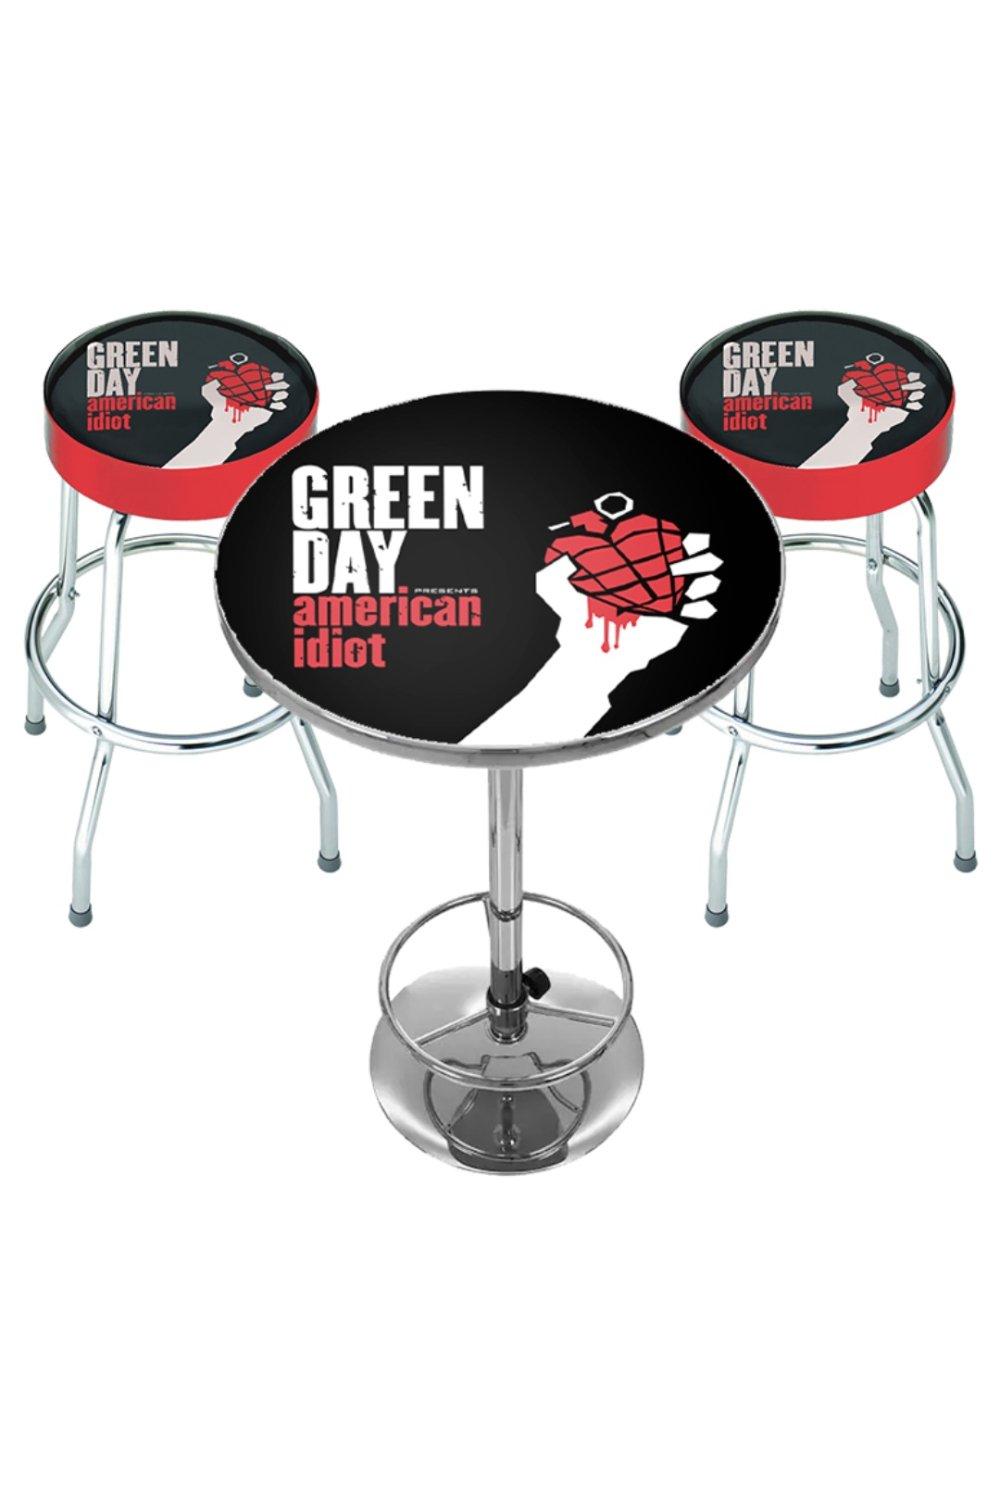 Green Day Bar Set - American Idiot